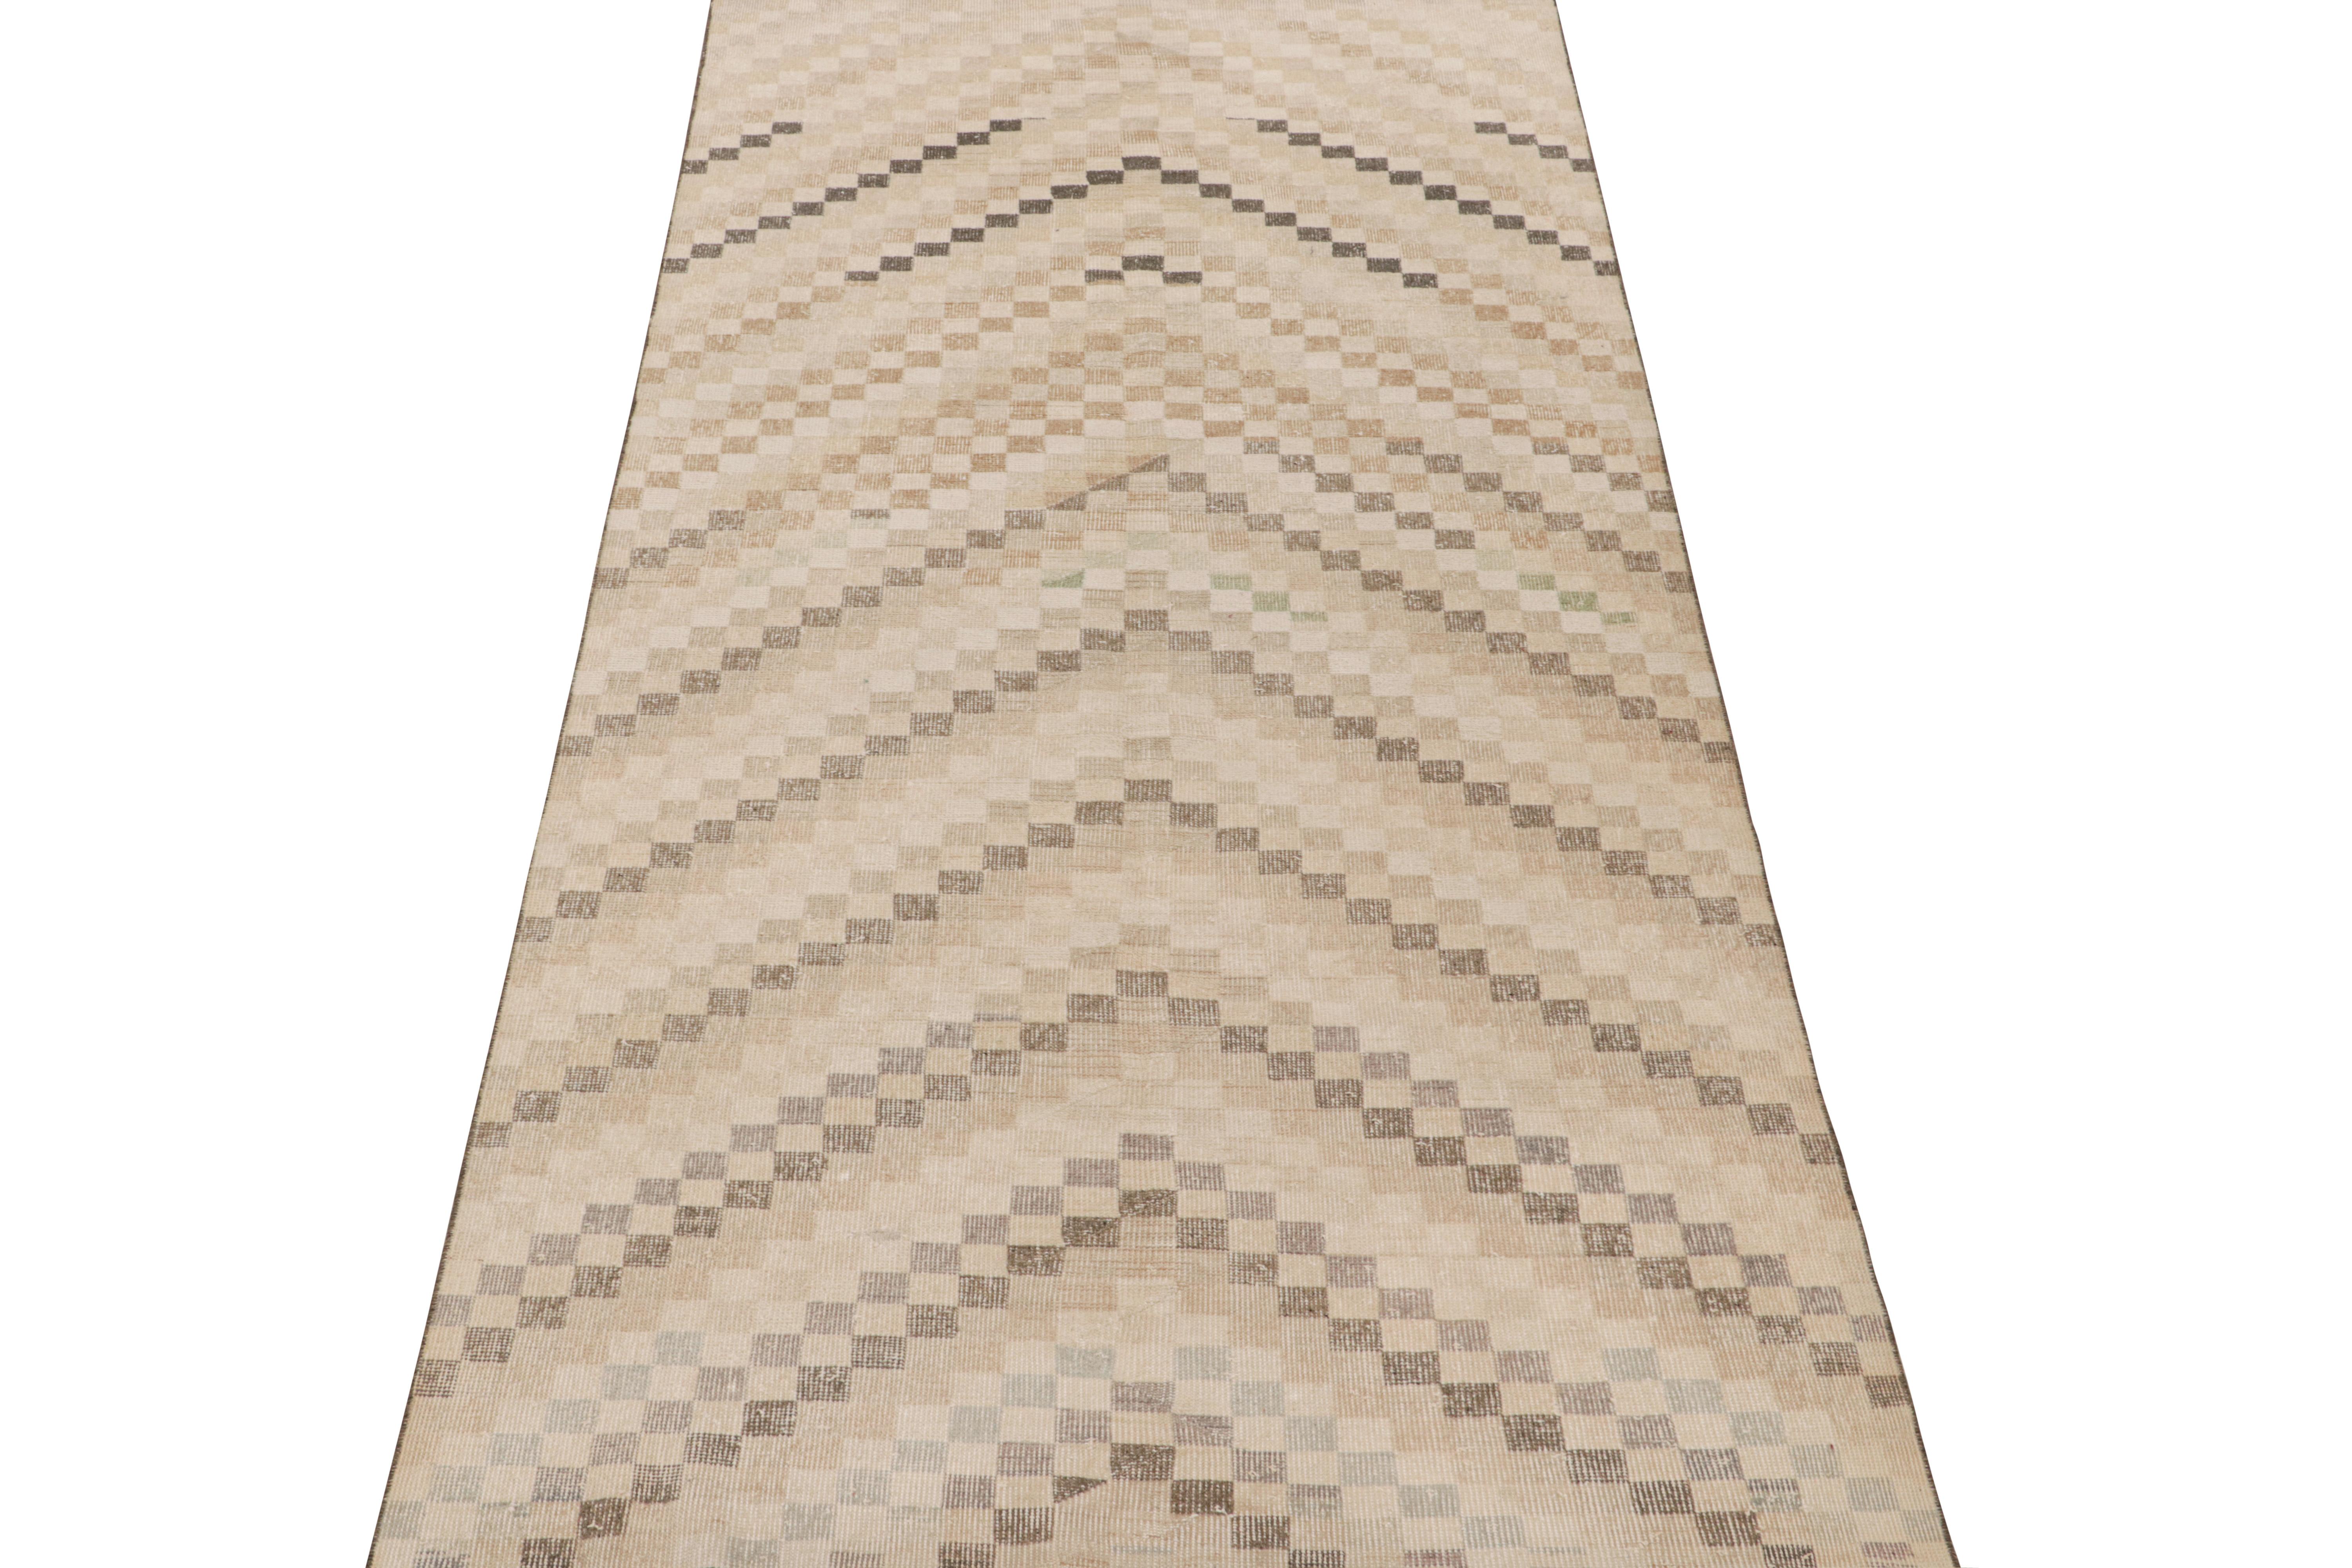 Hand-Knotted Vintage Zeki Müren Rug in Beige-Brown Geometric Patterns by Rug & Kilim